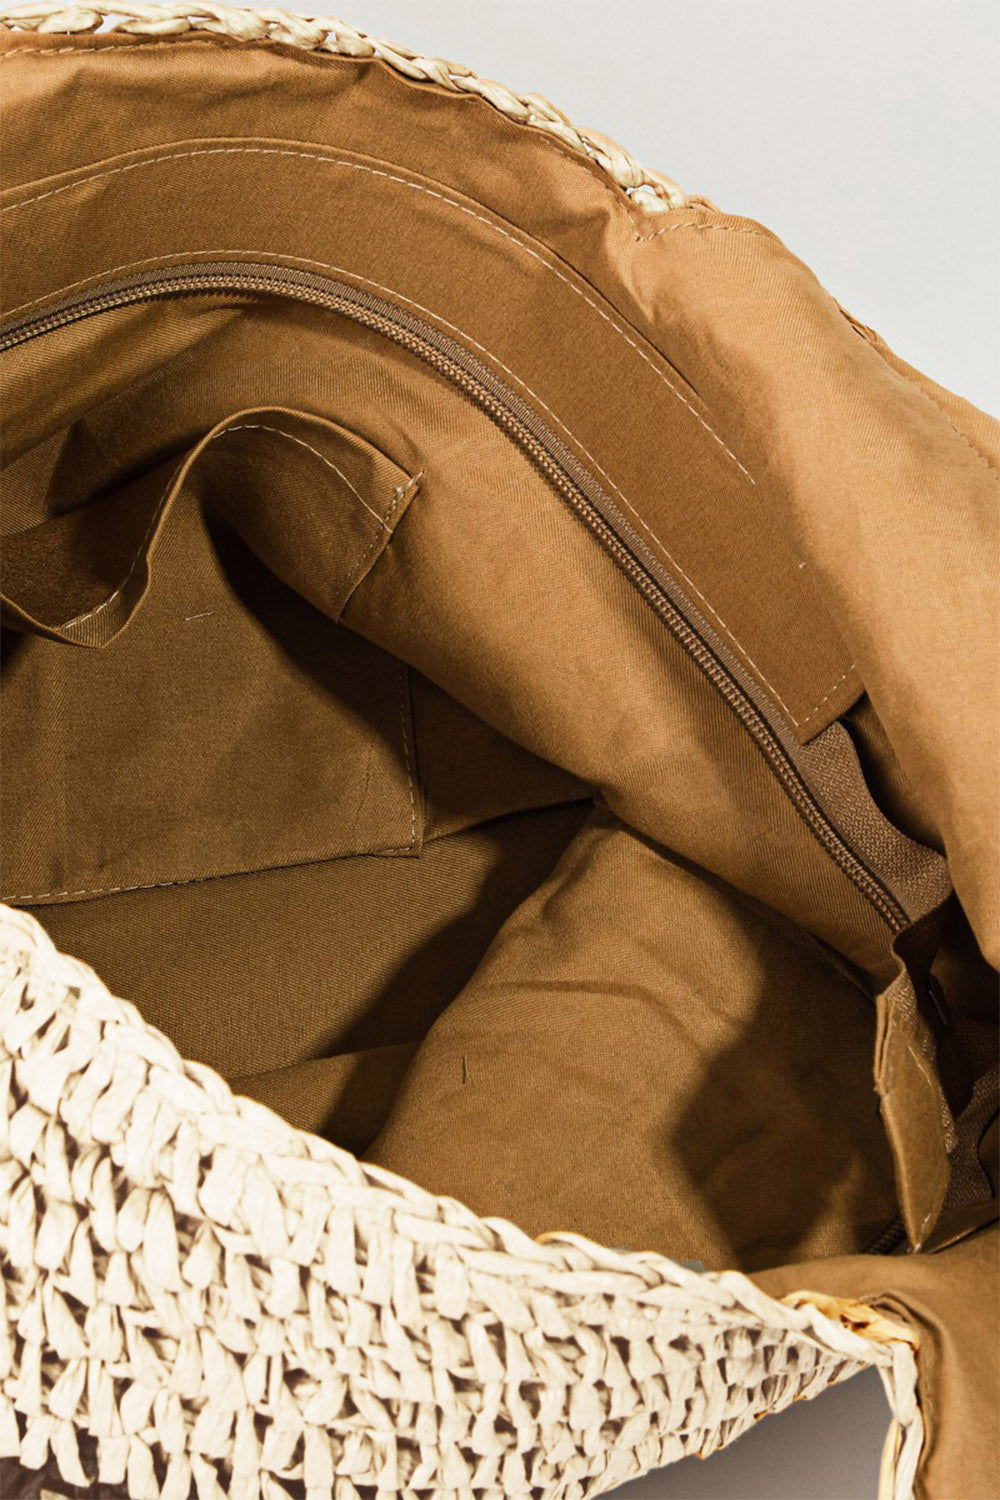 TEEK - Fame Striped Straw Braided Tote Bag BAG TEEK Trend   